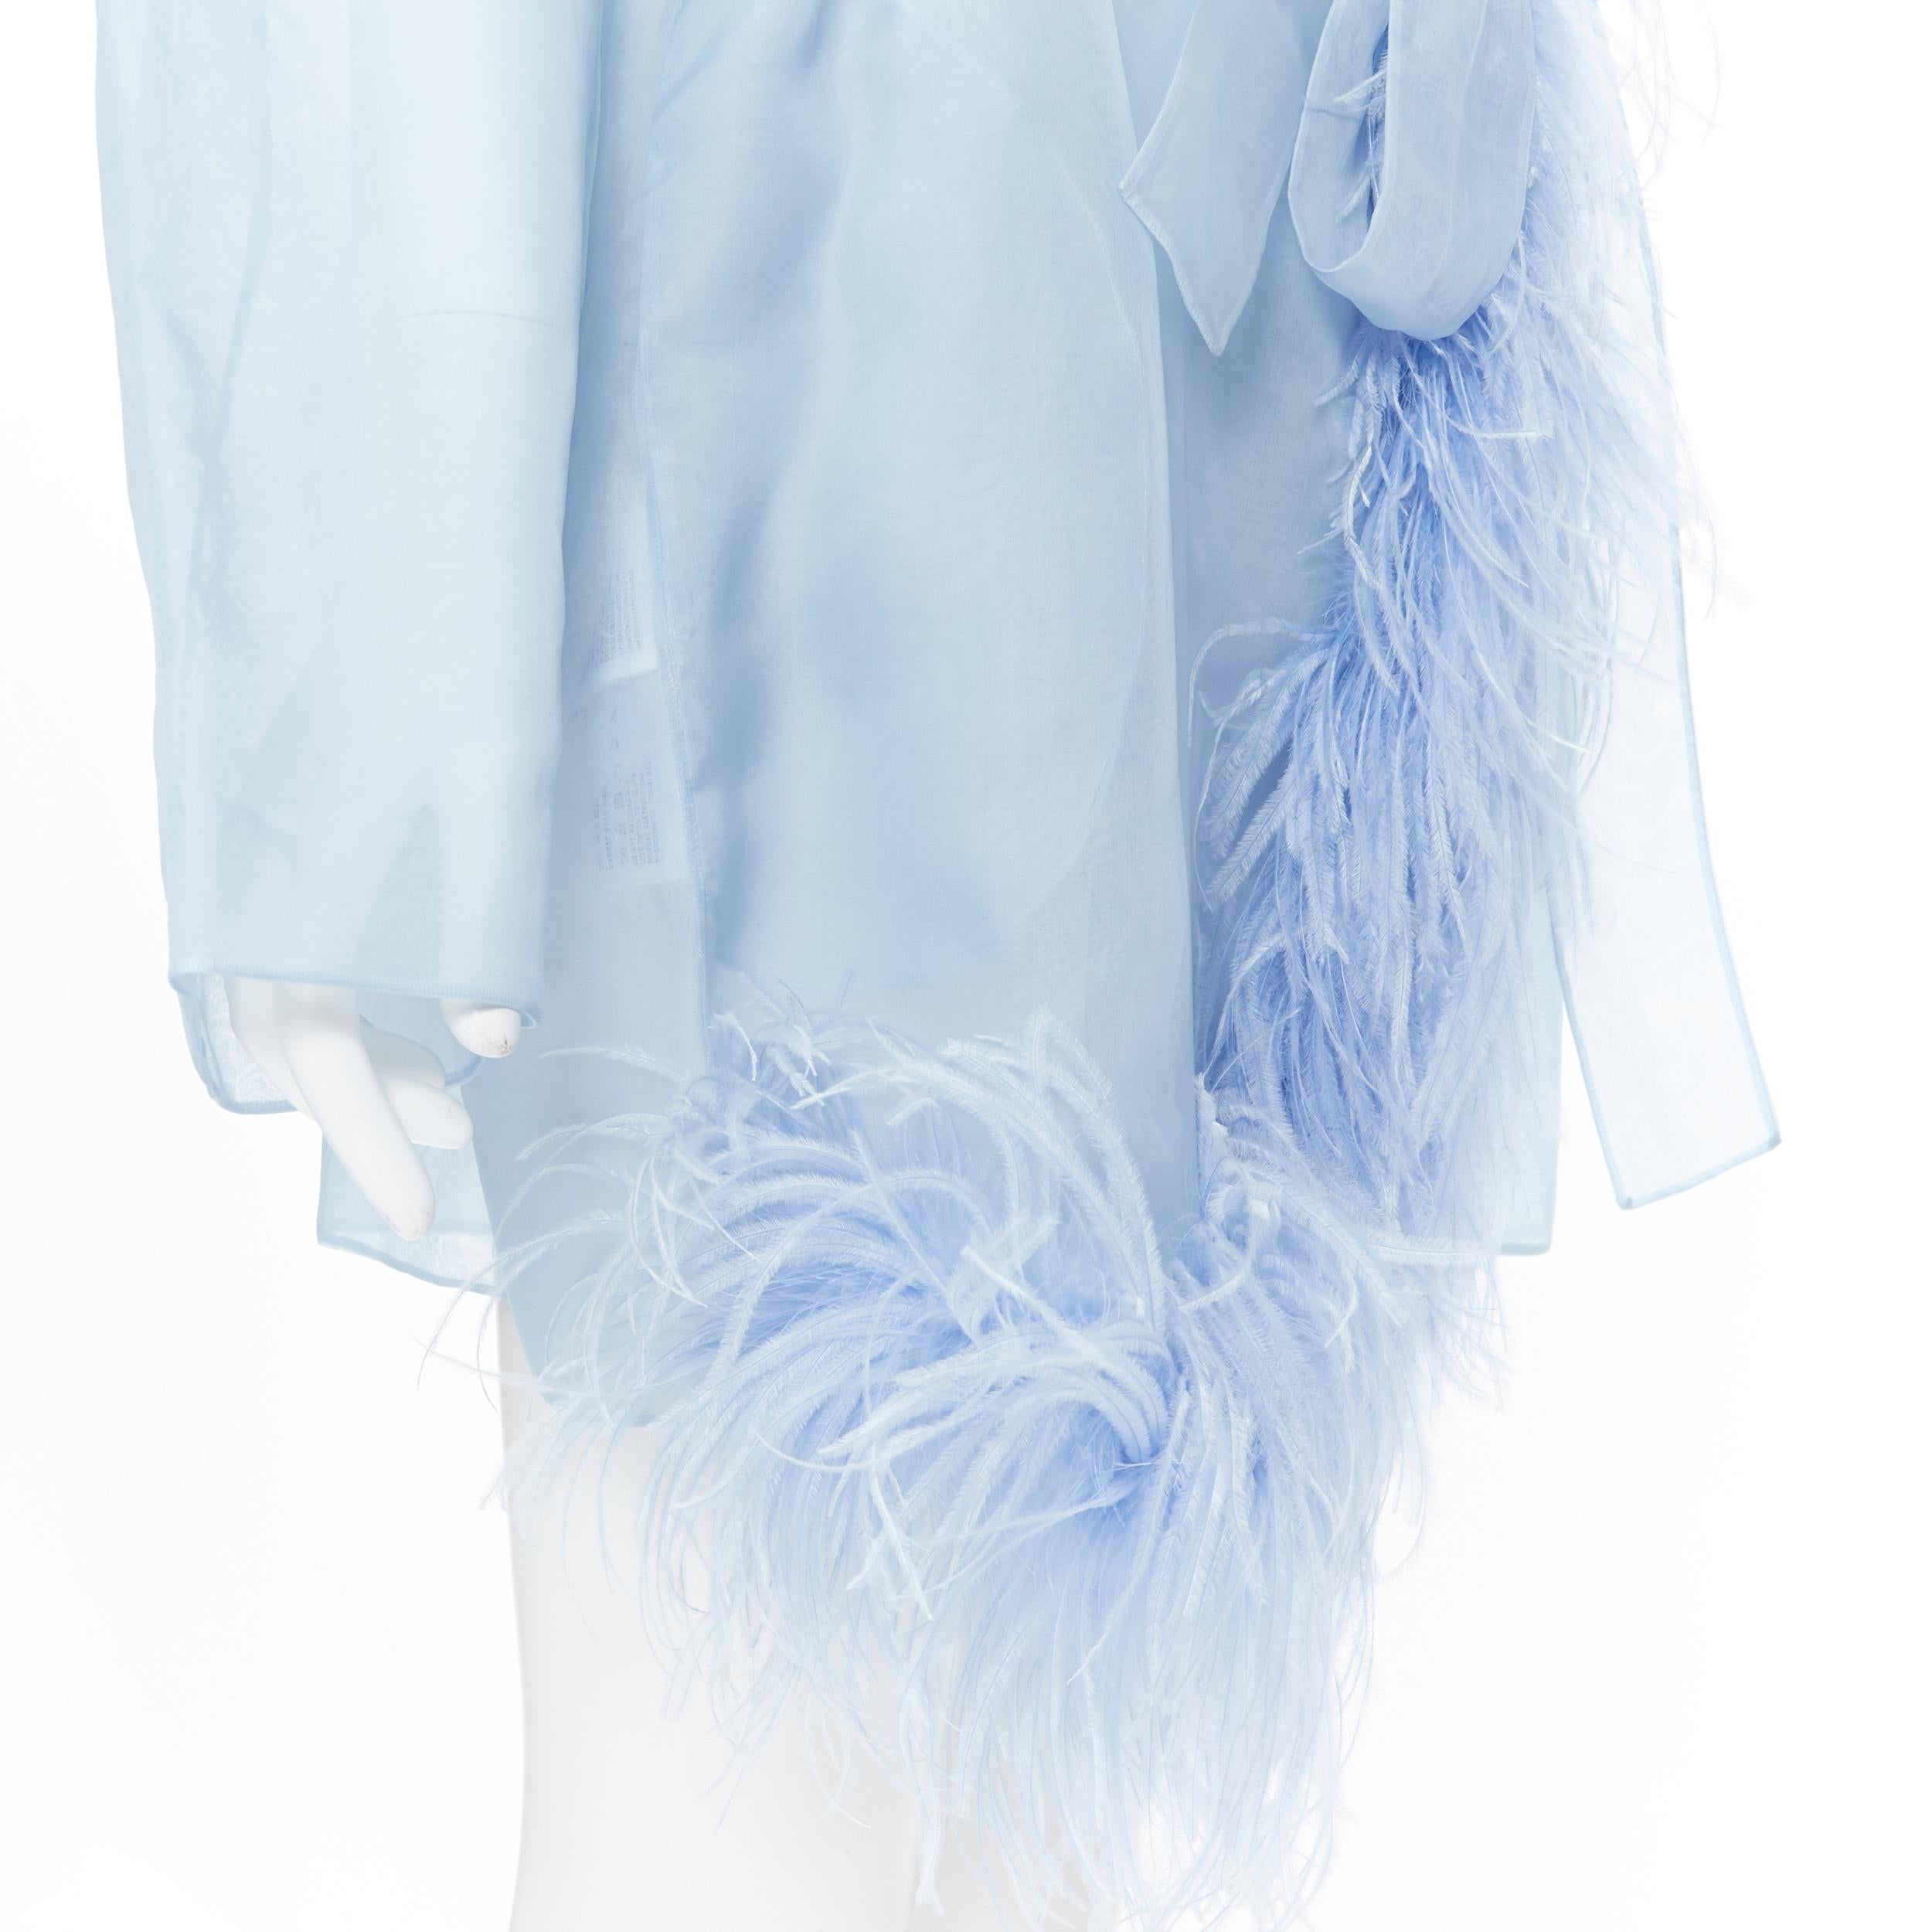 new PRADA 100% silk blue sheer feather trimmed hem belted shawl robe coat M
Brand: Prada
Designer: Miuccia Prada
As seen on: Rihanna, Kendall Jenner, Kris Jenner
Model Name / Style: Robe
Material: Silk
Color: Blue
Pattern: Solid
Extra Detail: Shawl